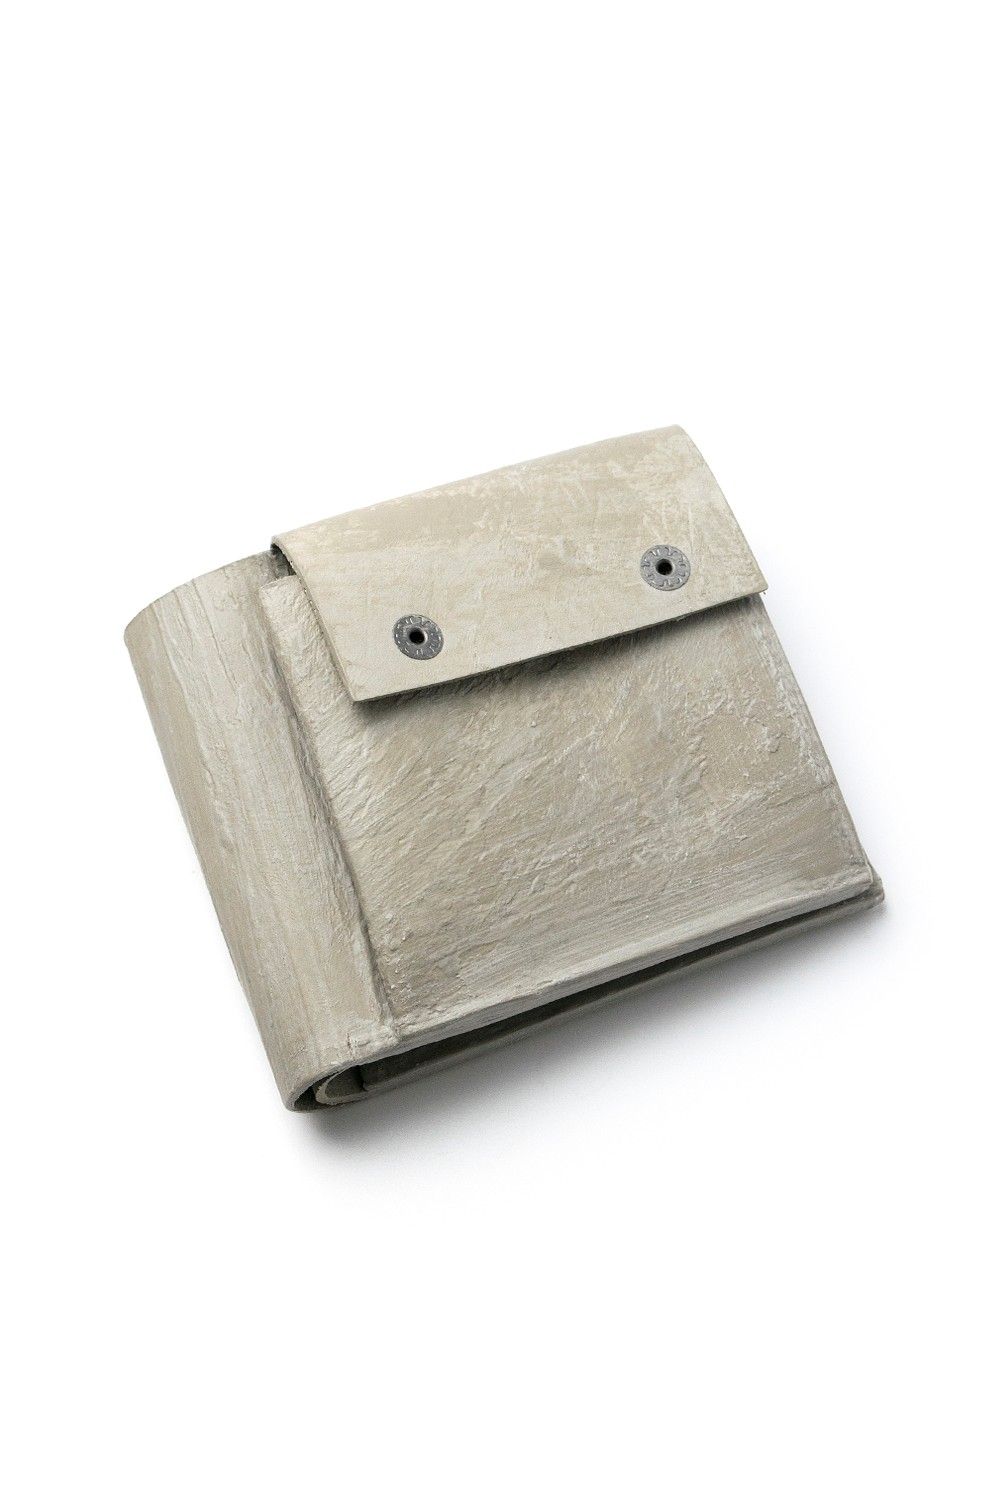 KAGARI YUSUKE - 二つ折り財布 [グレー] / mw06-gr | BONITA ONLINE STORE